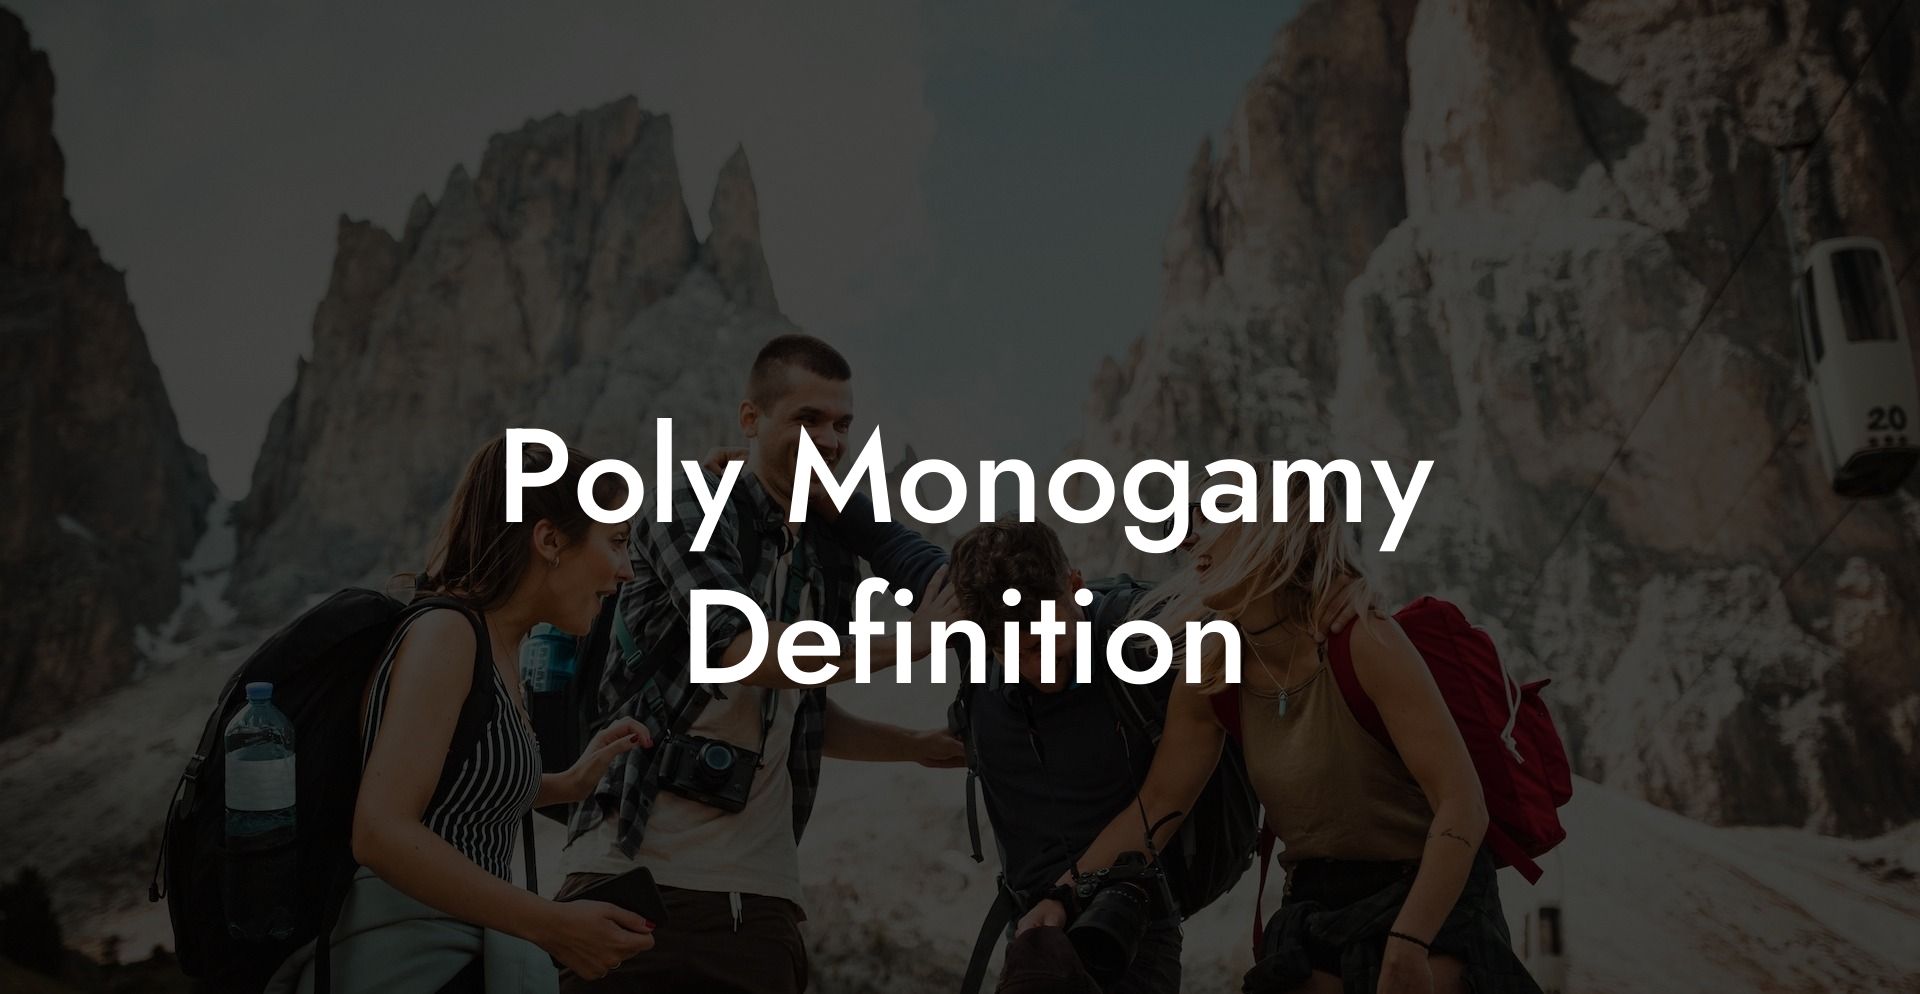 Poly Monogamy Definition